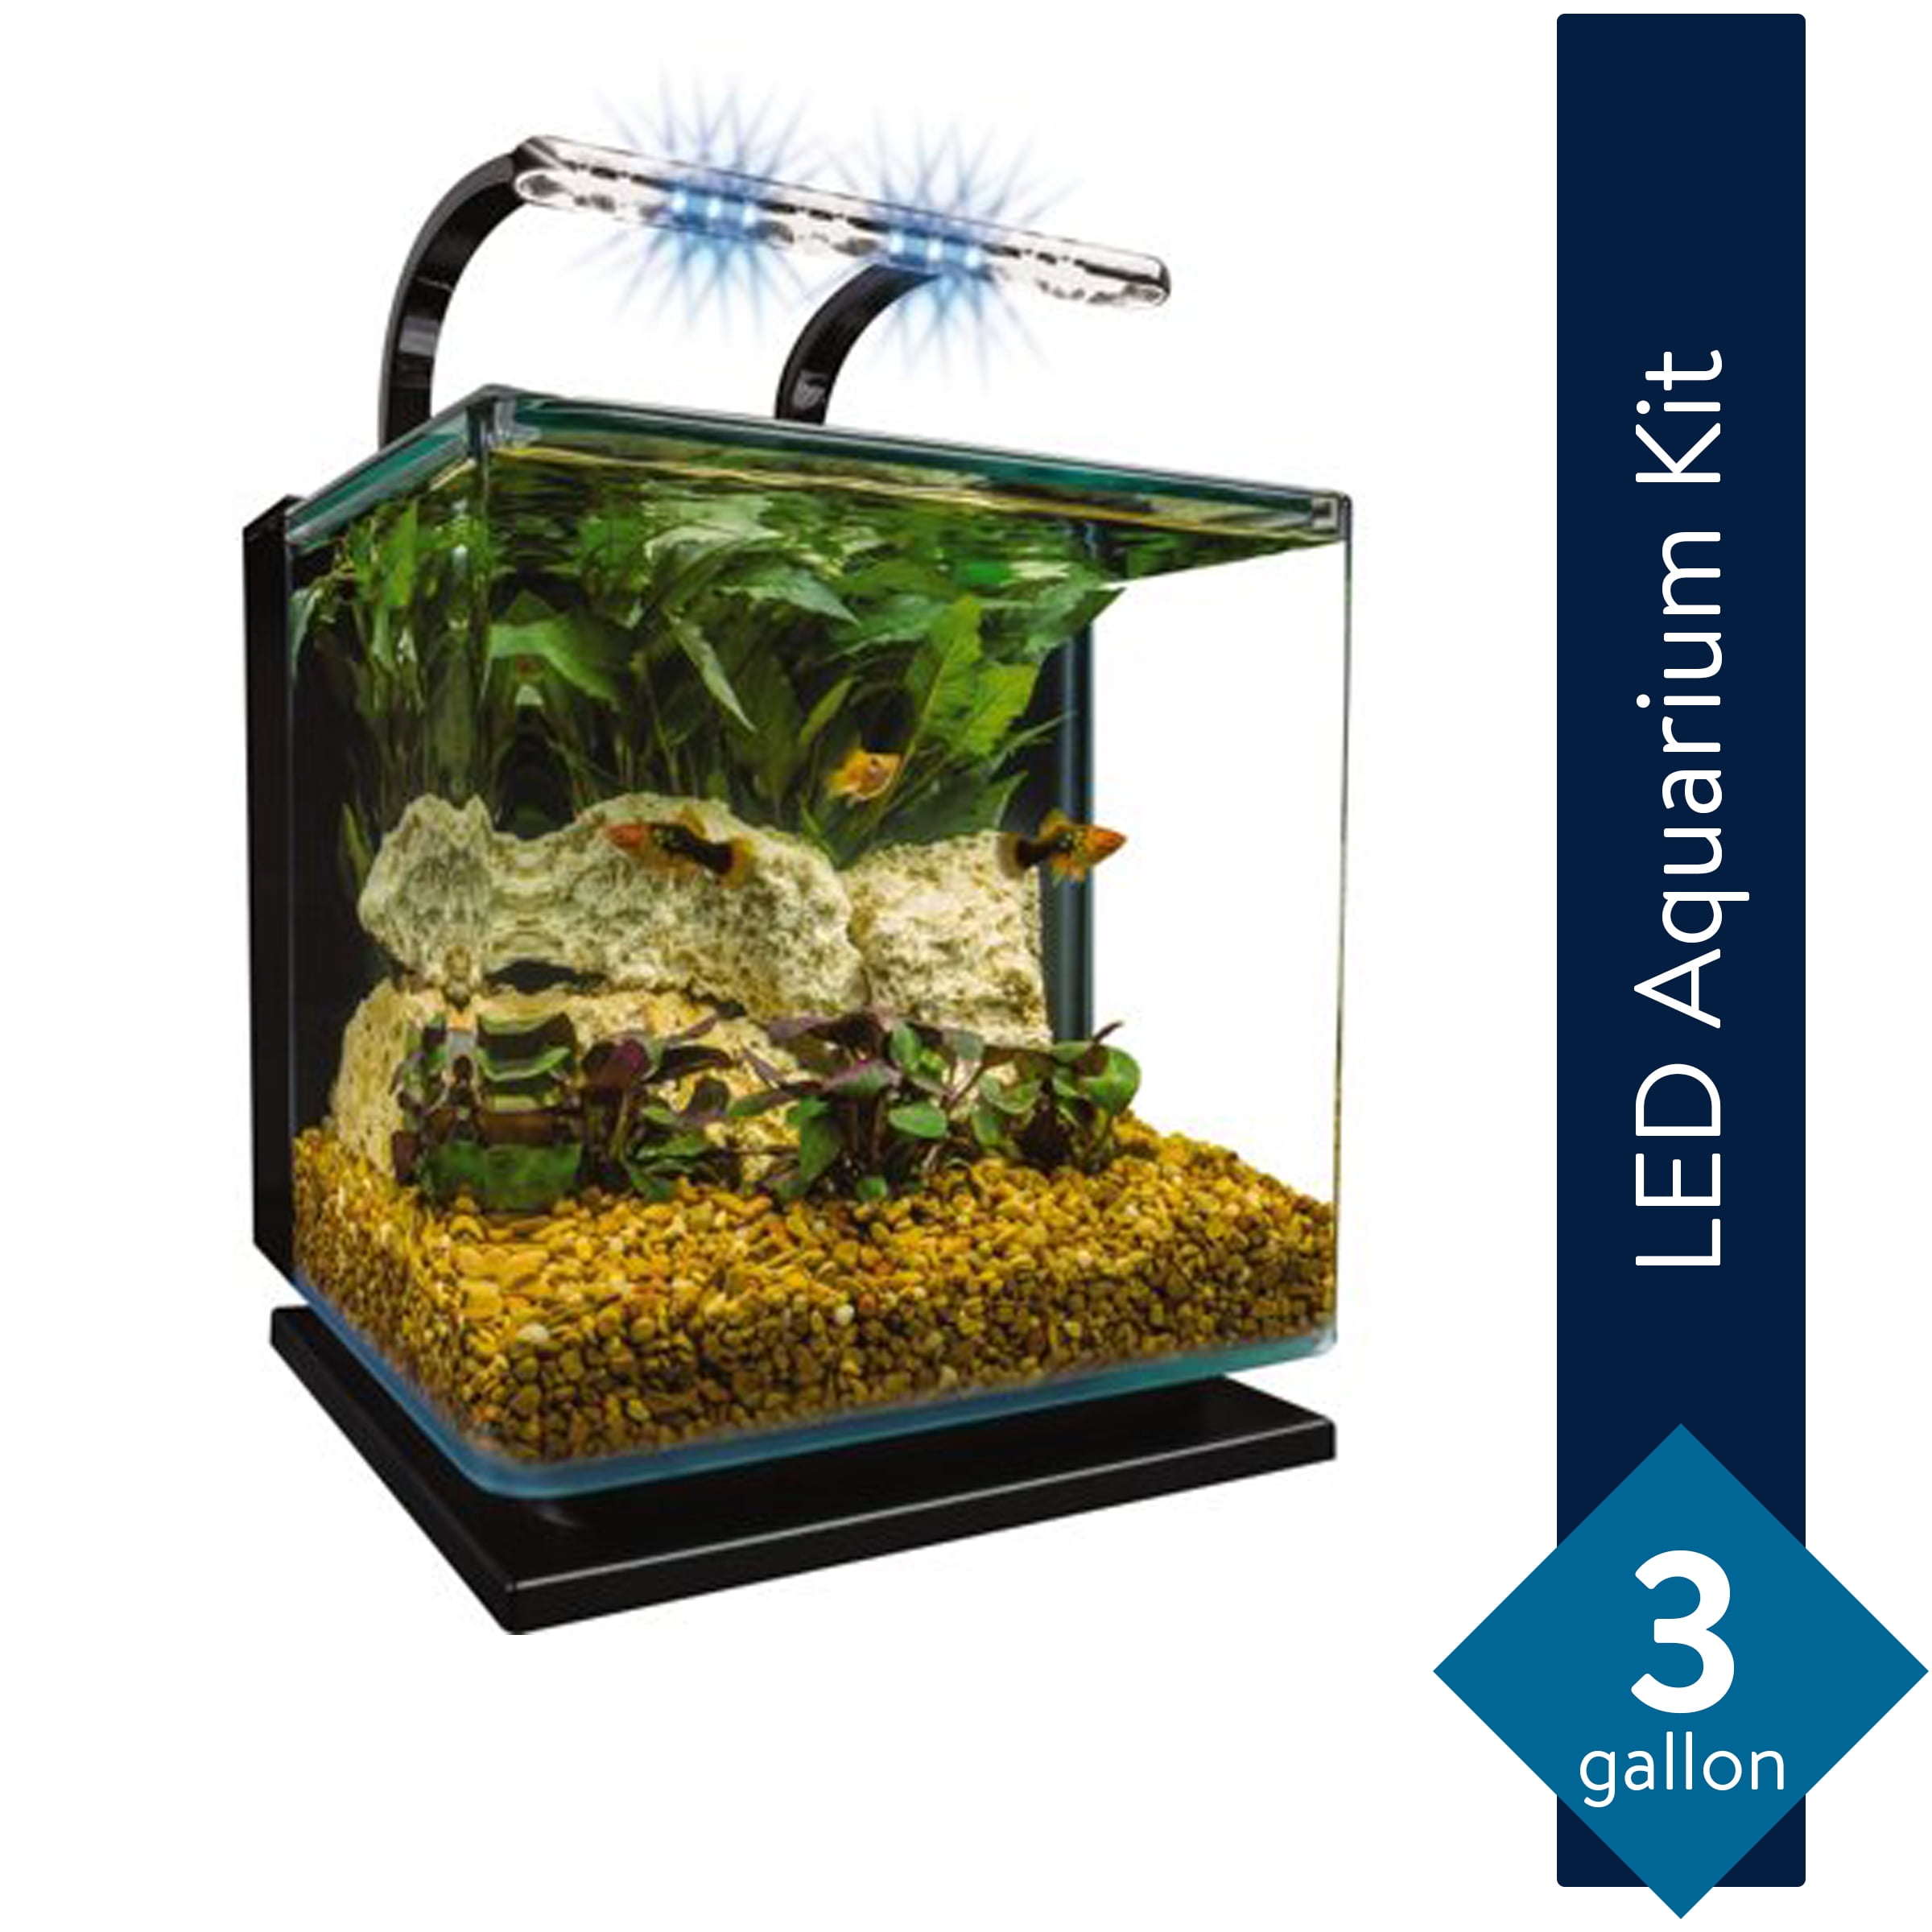 Marineland Contour 3 Aquarium Kit 3 Gallons, Rounded Glass Corners